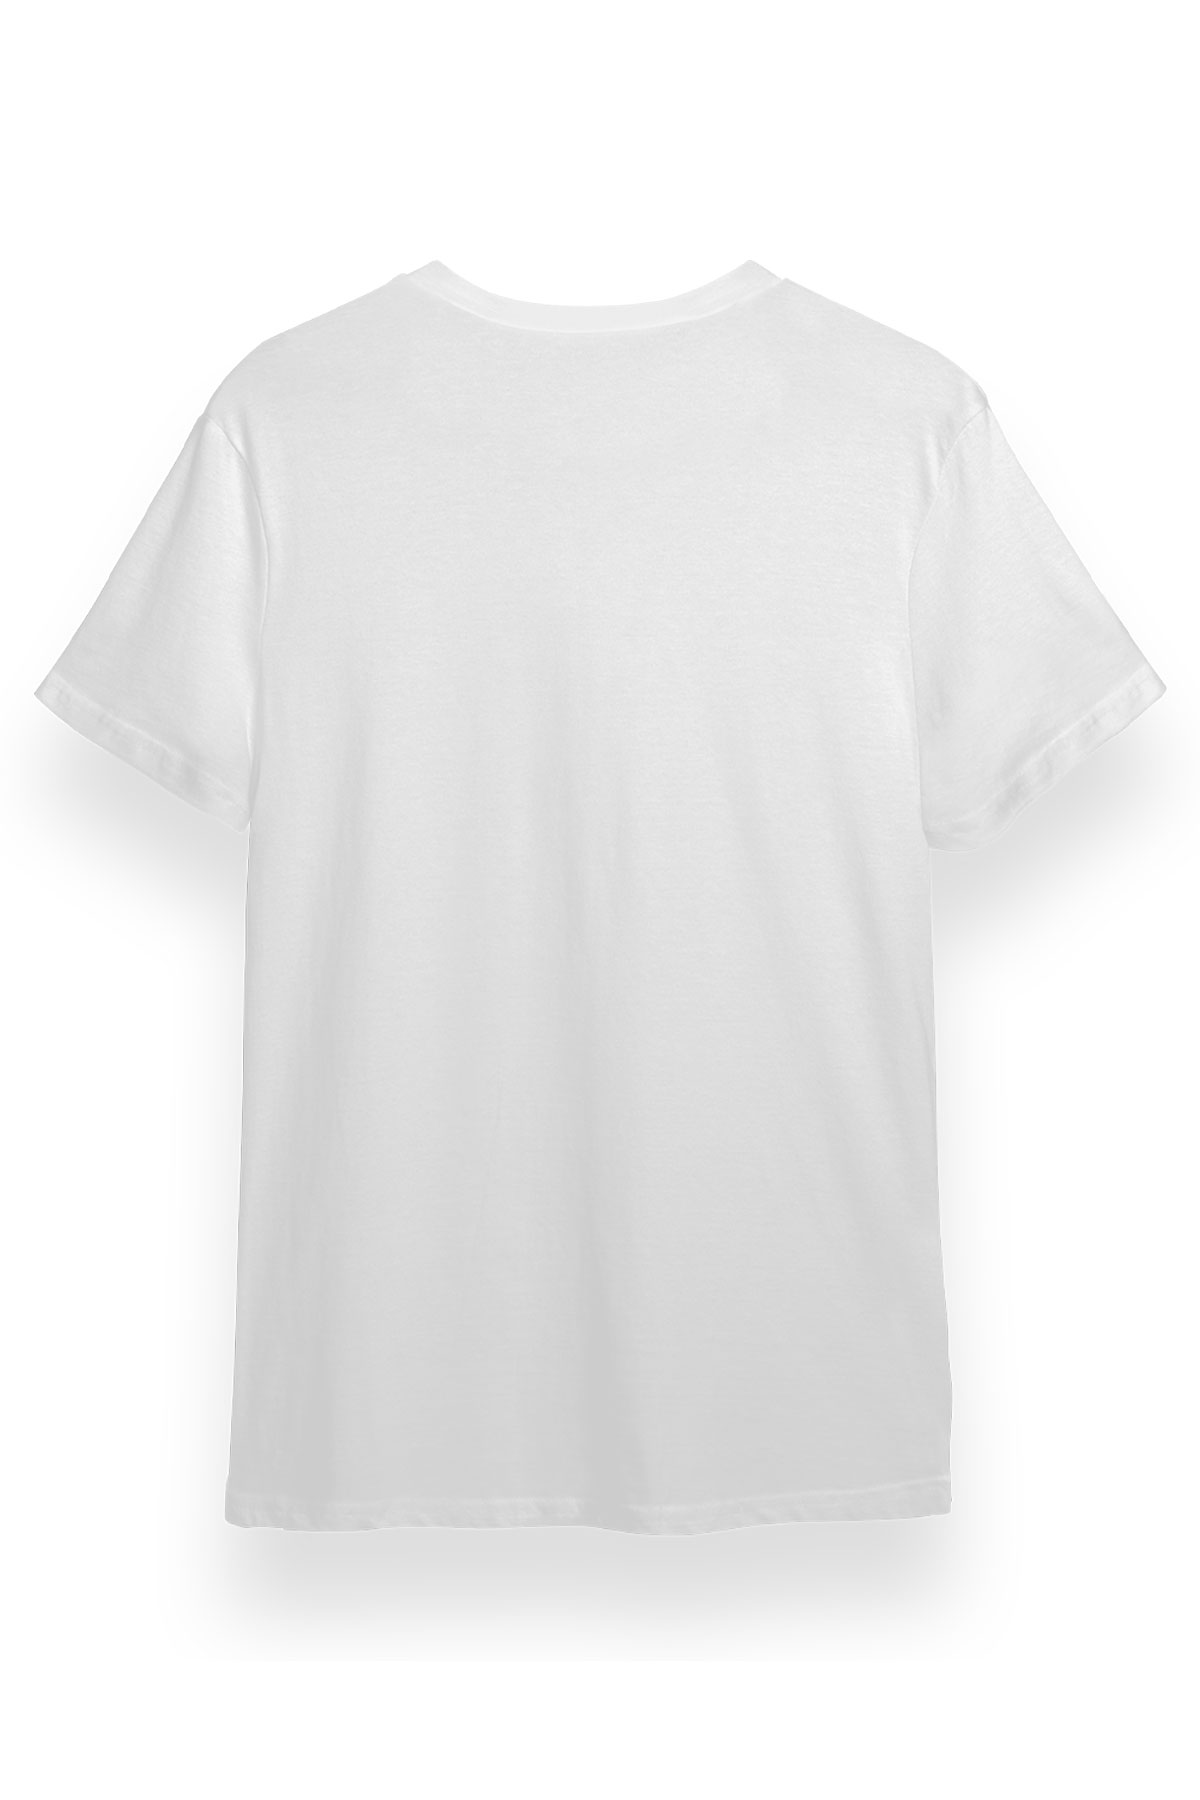 Transformers Decepticons Logo Beyaz Kısa kol Erkek Tshirt